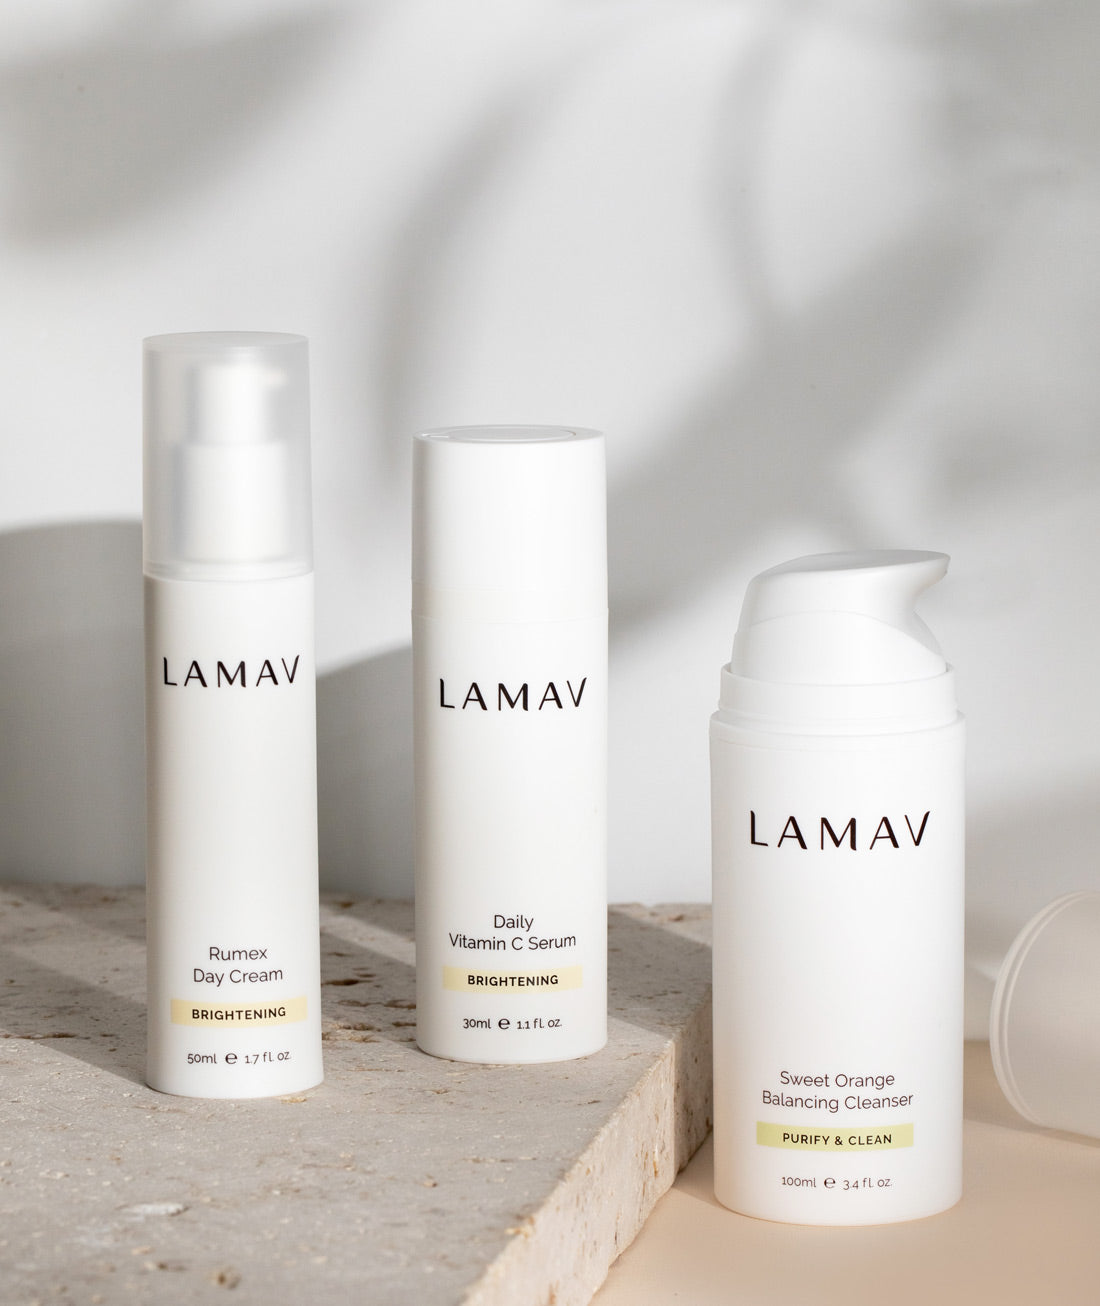 LAMAV best skin brightening products